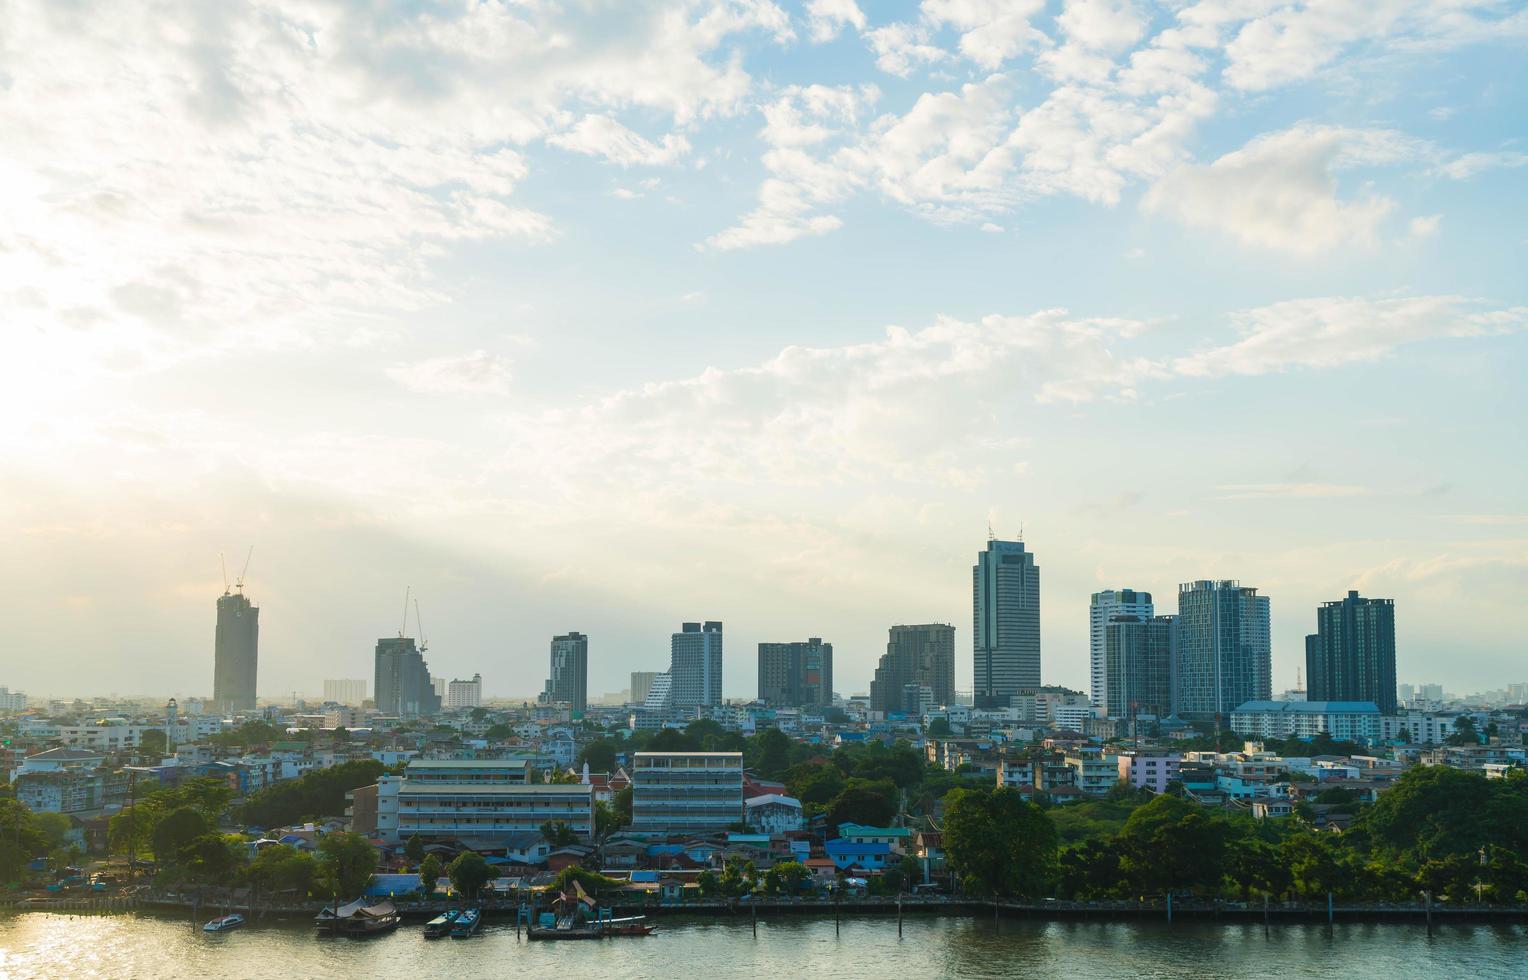 bangkok stad in thailand foto